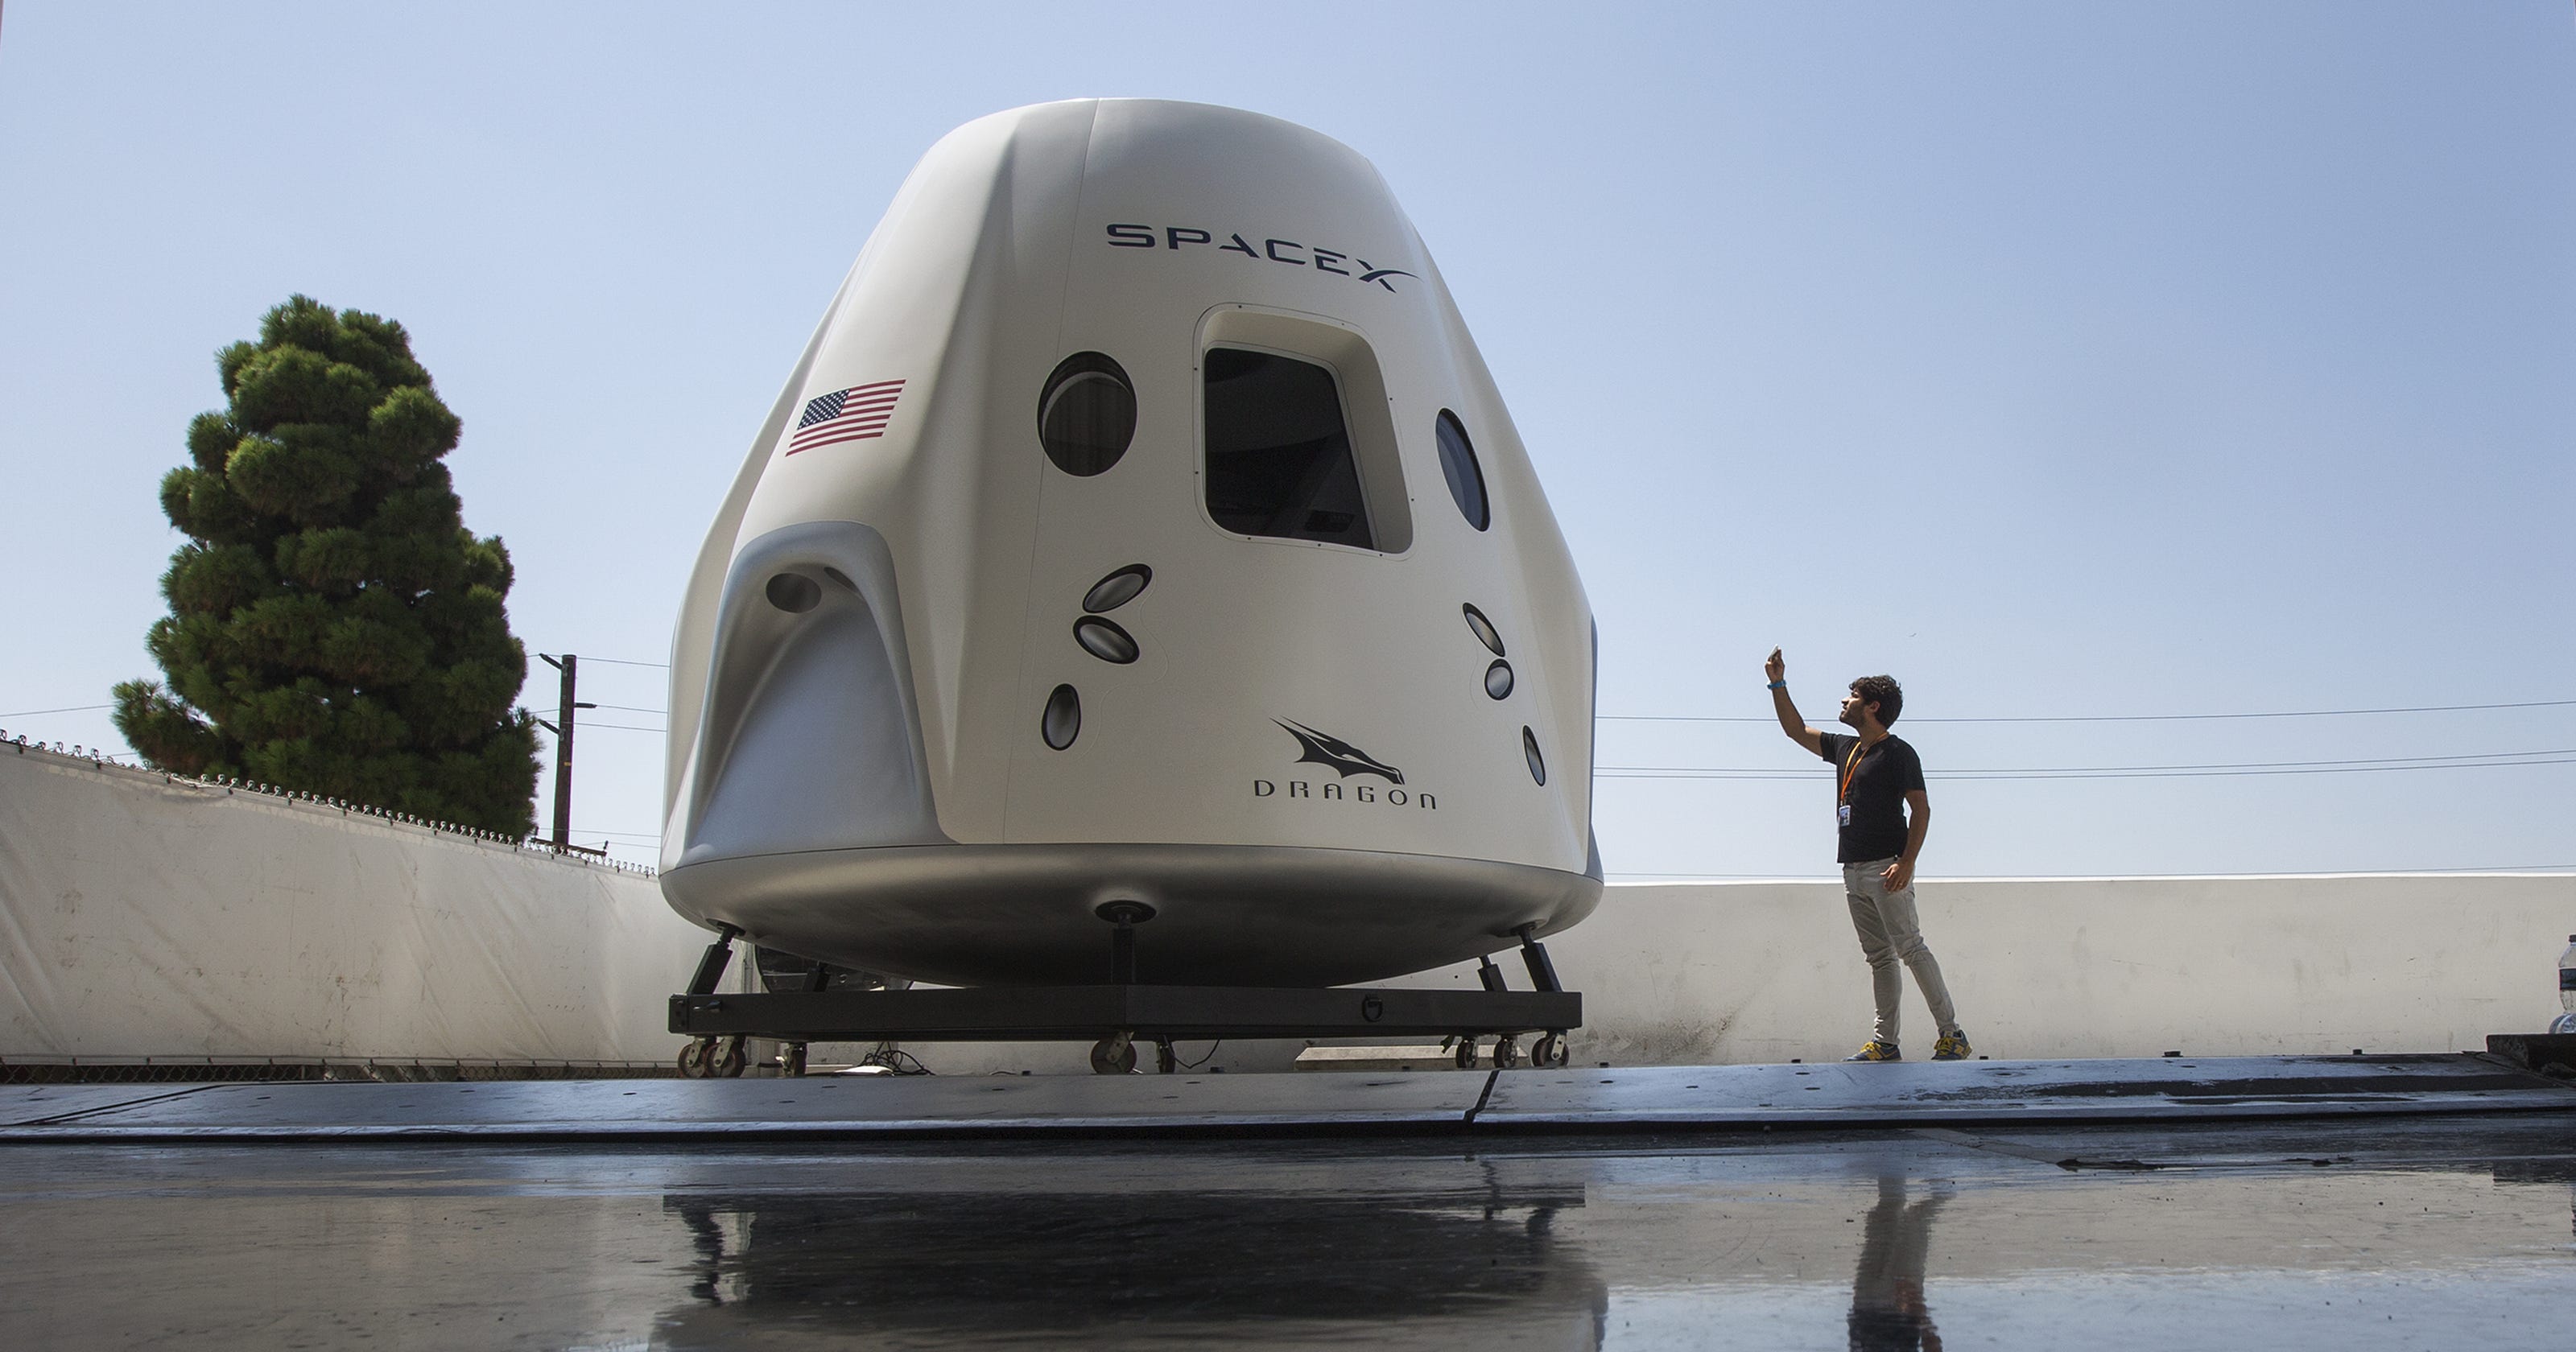 SpaceX: Inside their Crew Dragon spaceship for NASA astronauts